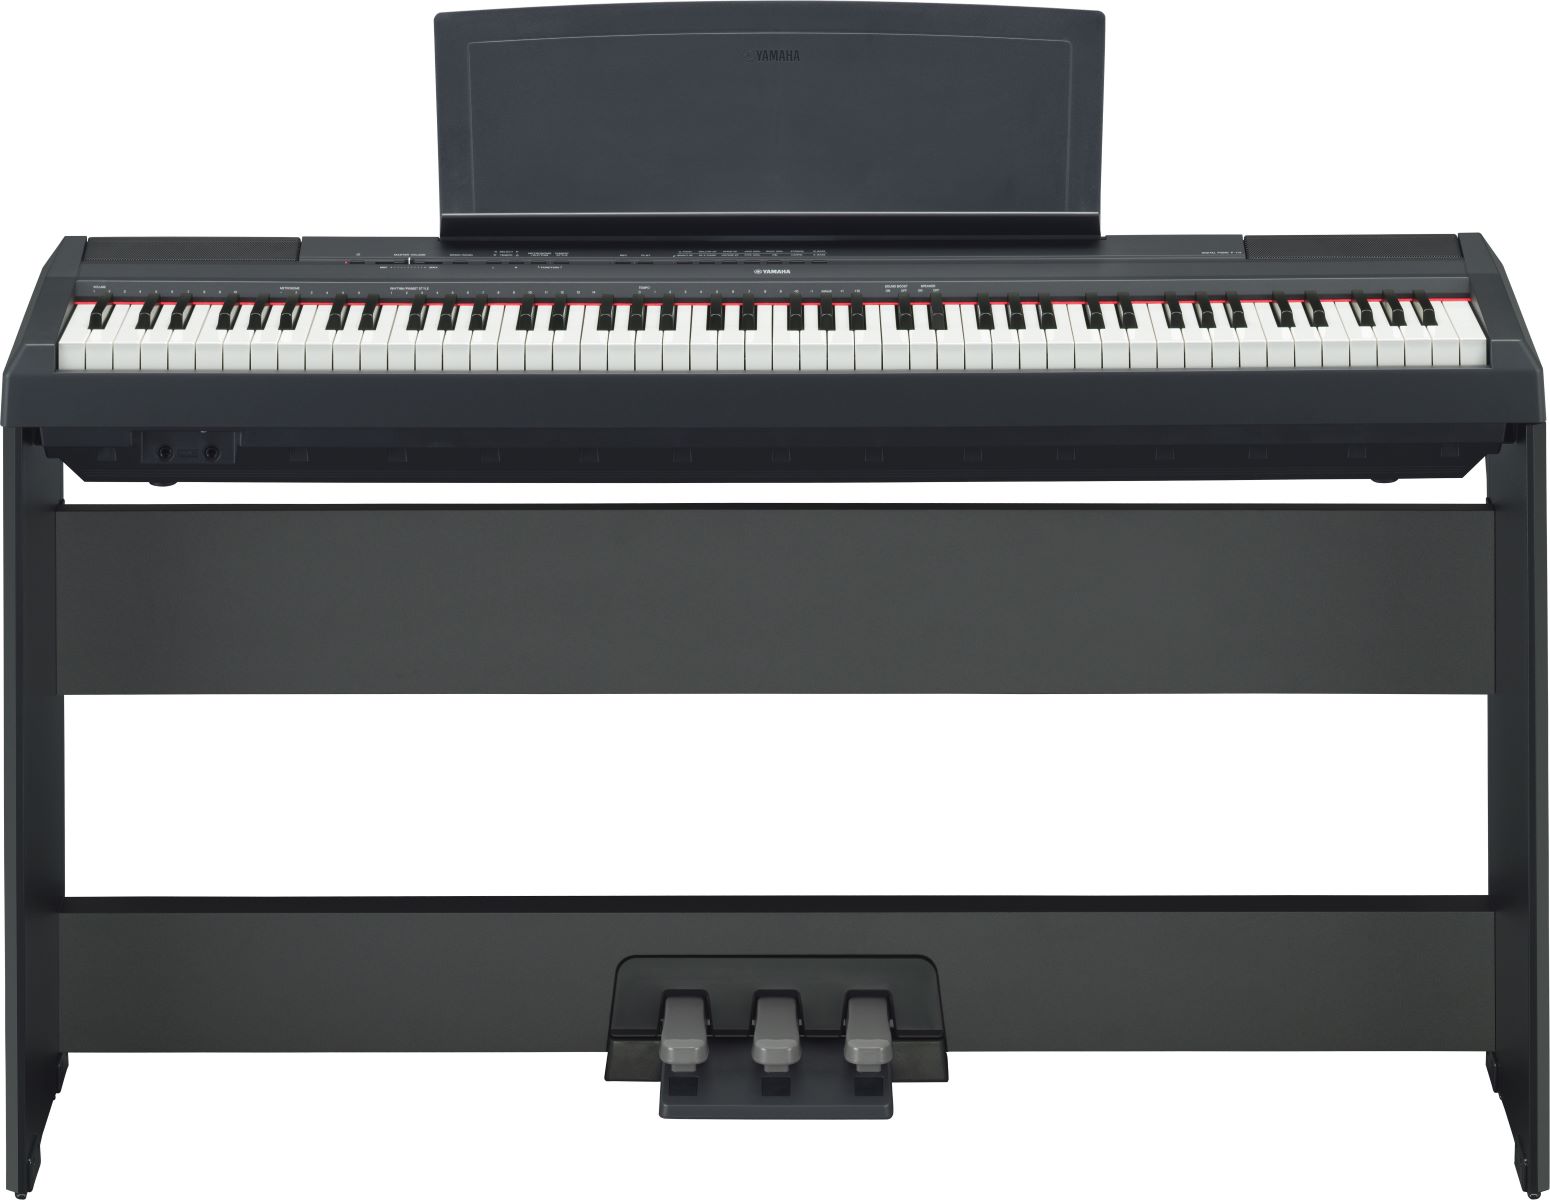 How To Set Up MIDI On Yamaha Digital Piano P115